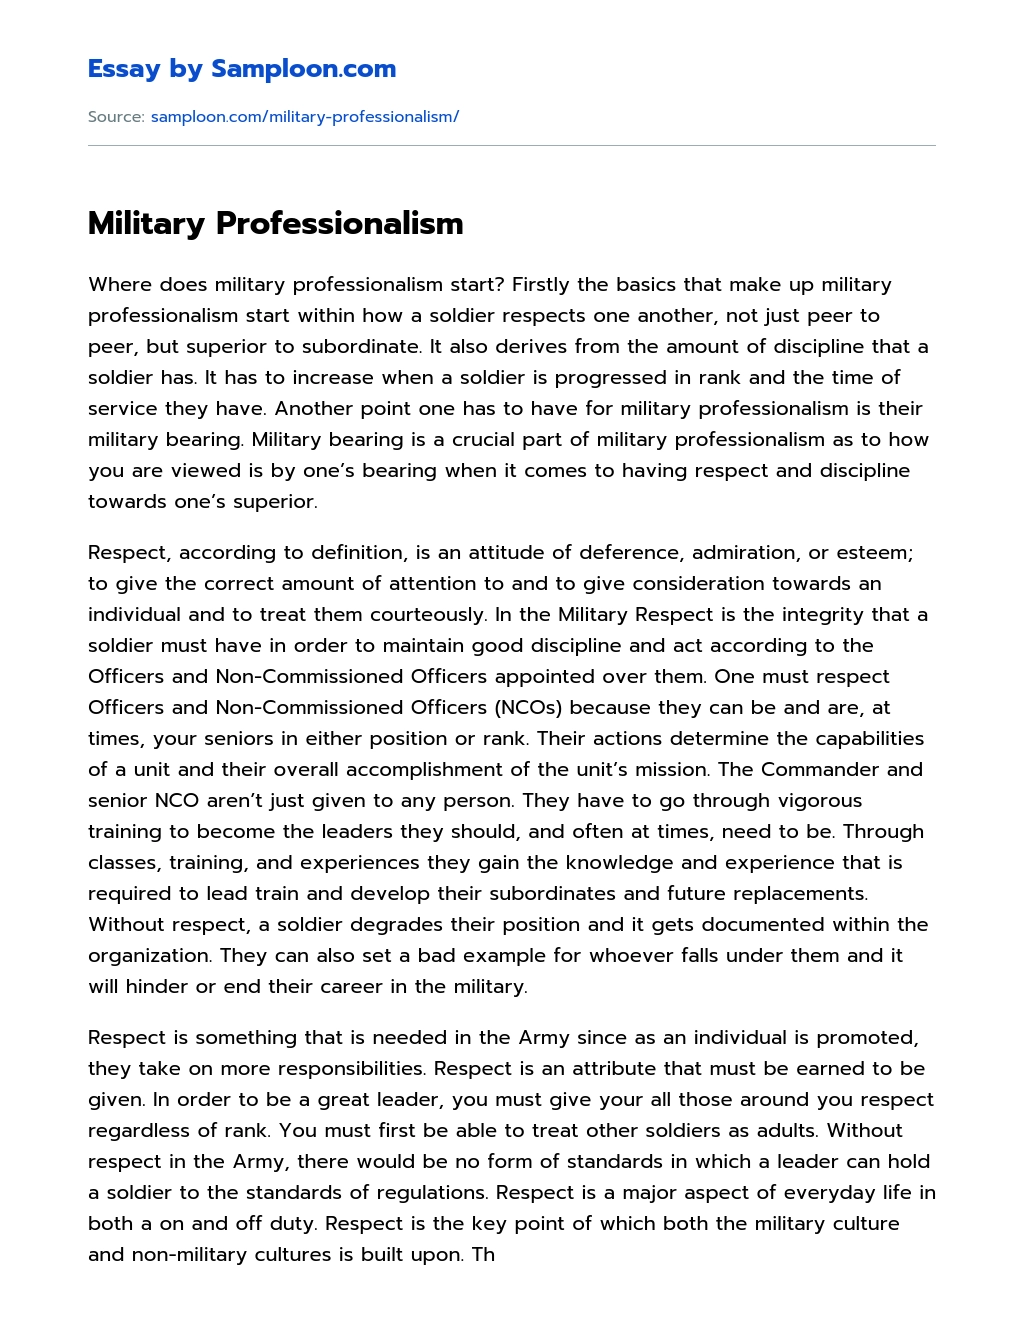 military professionalism essay 300 words